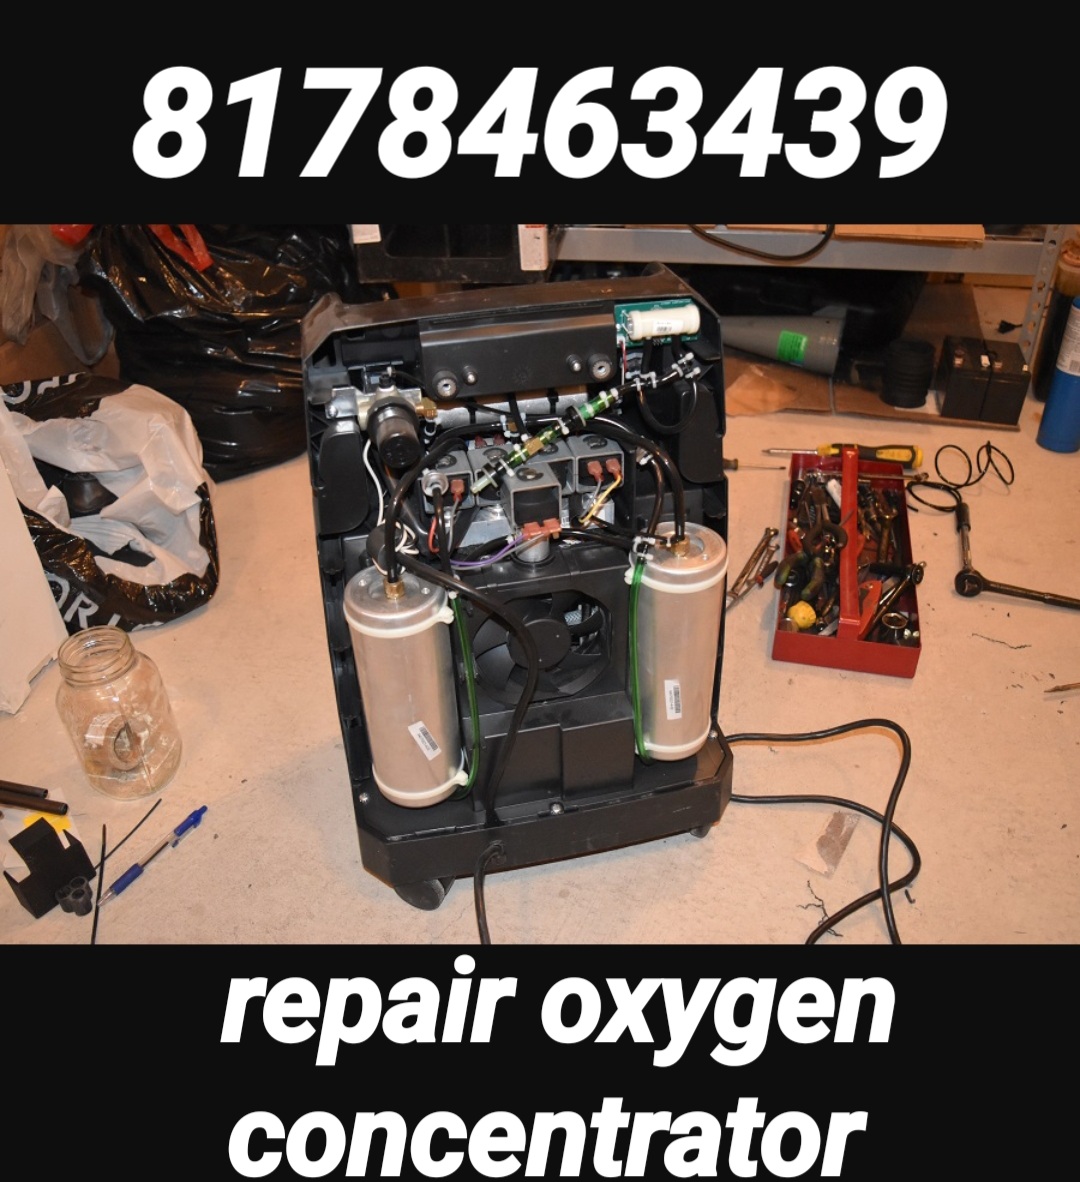 OXYGEN CONCENTRATOR MACHINE REPAIR 8178463439